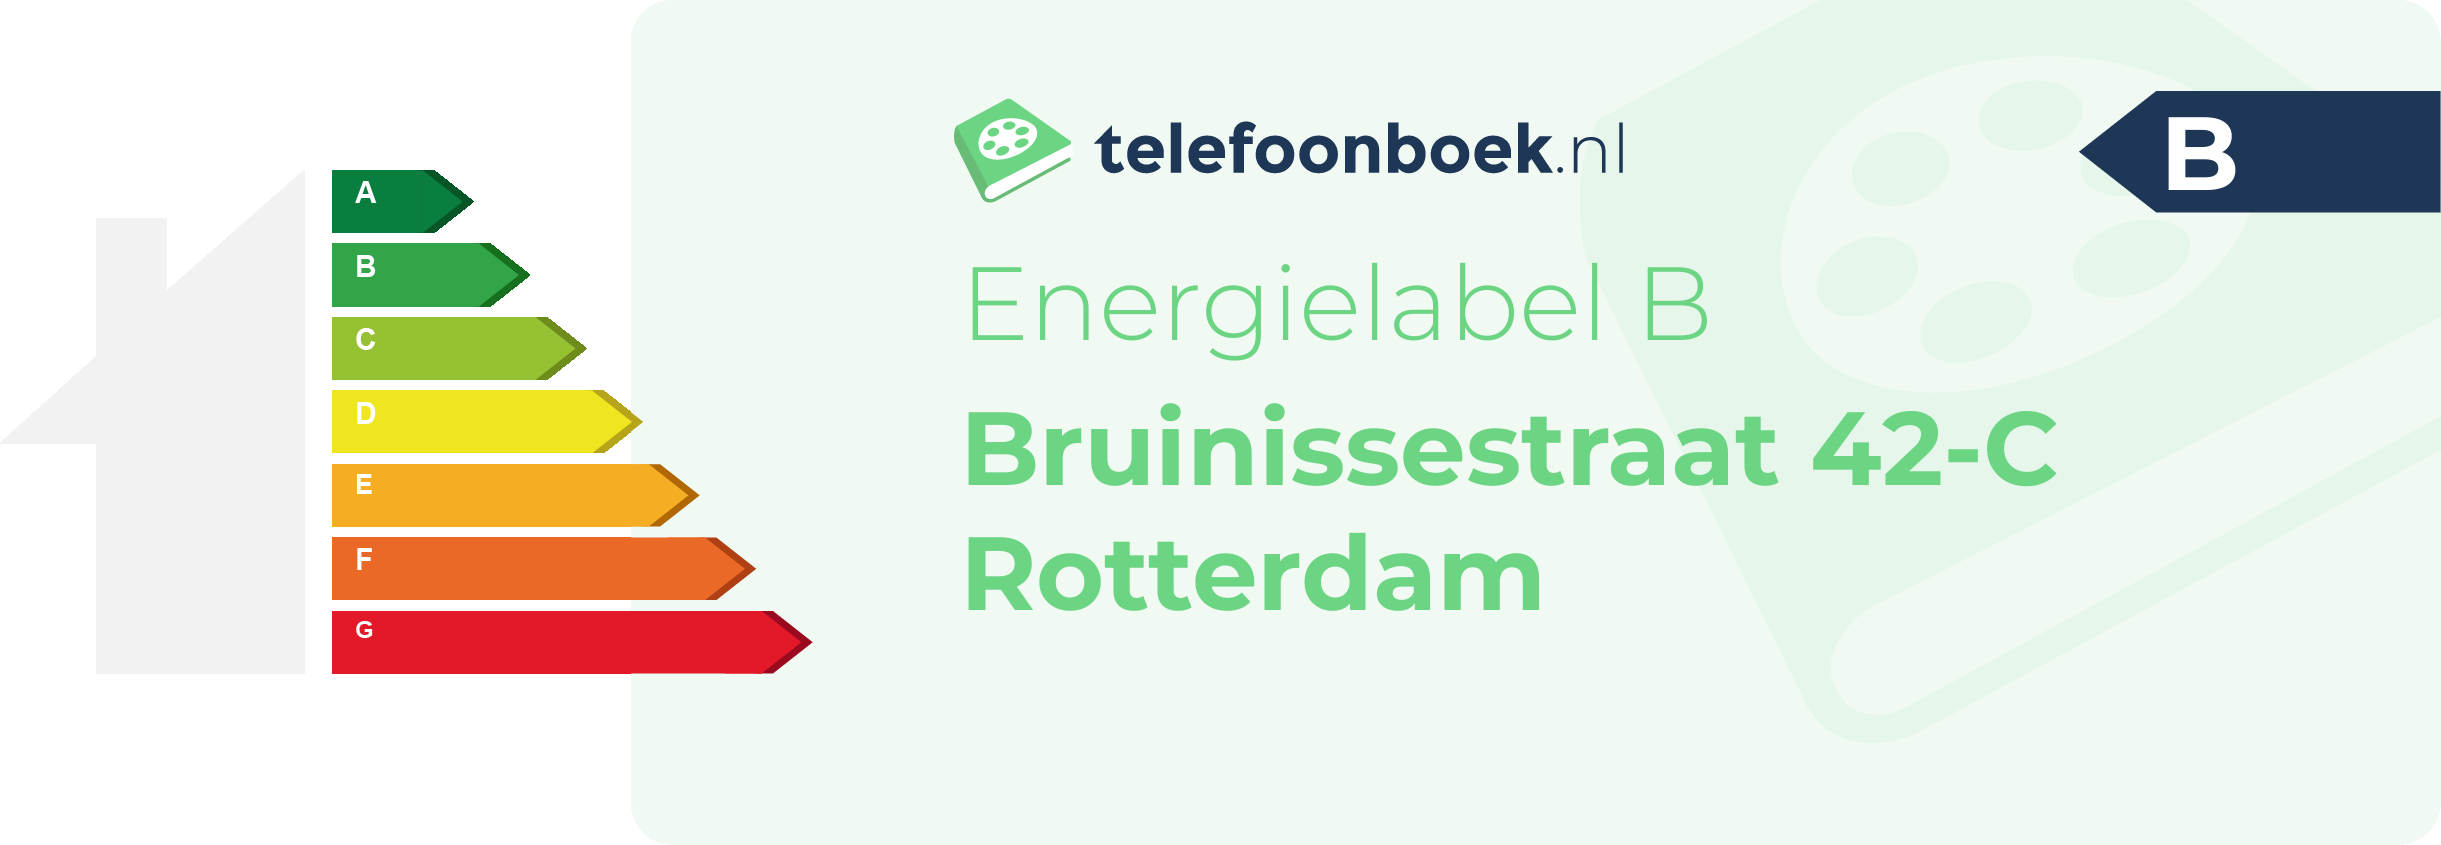 Energielabel Bruinissestraat 42-C Rotterdam